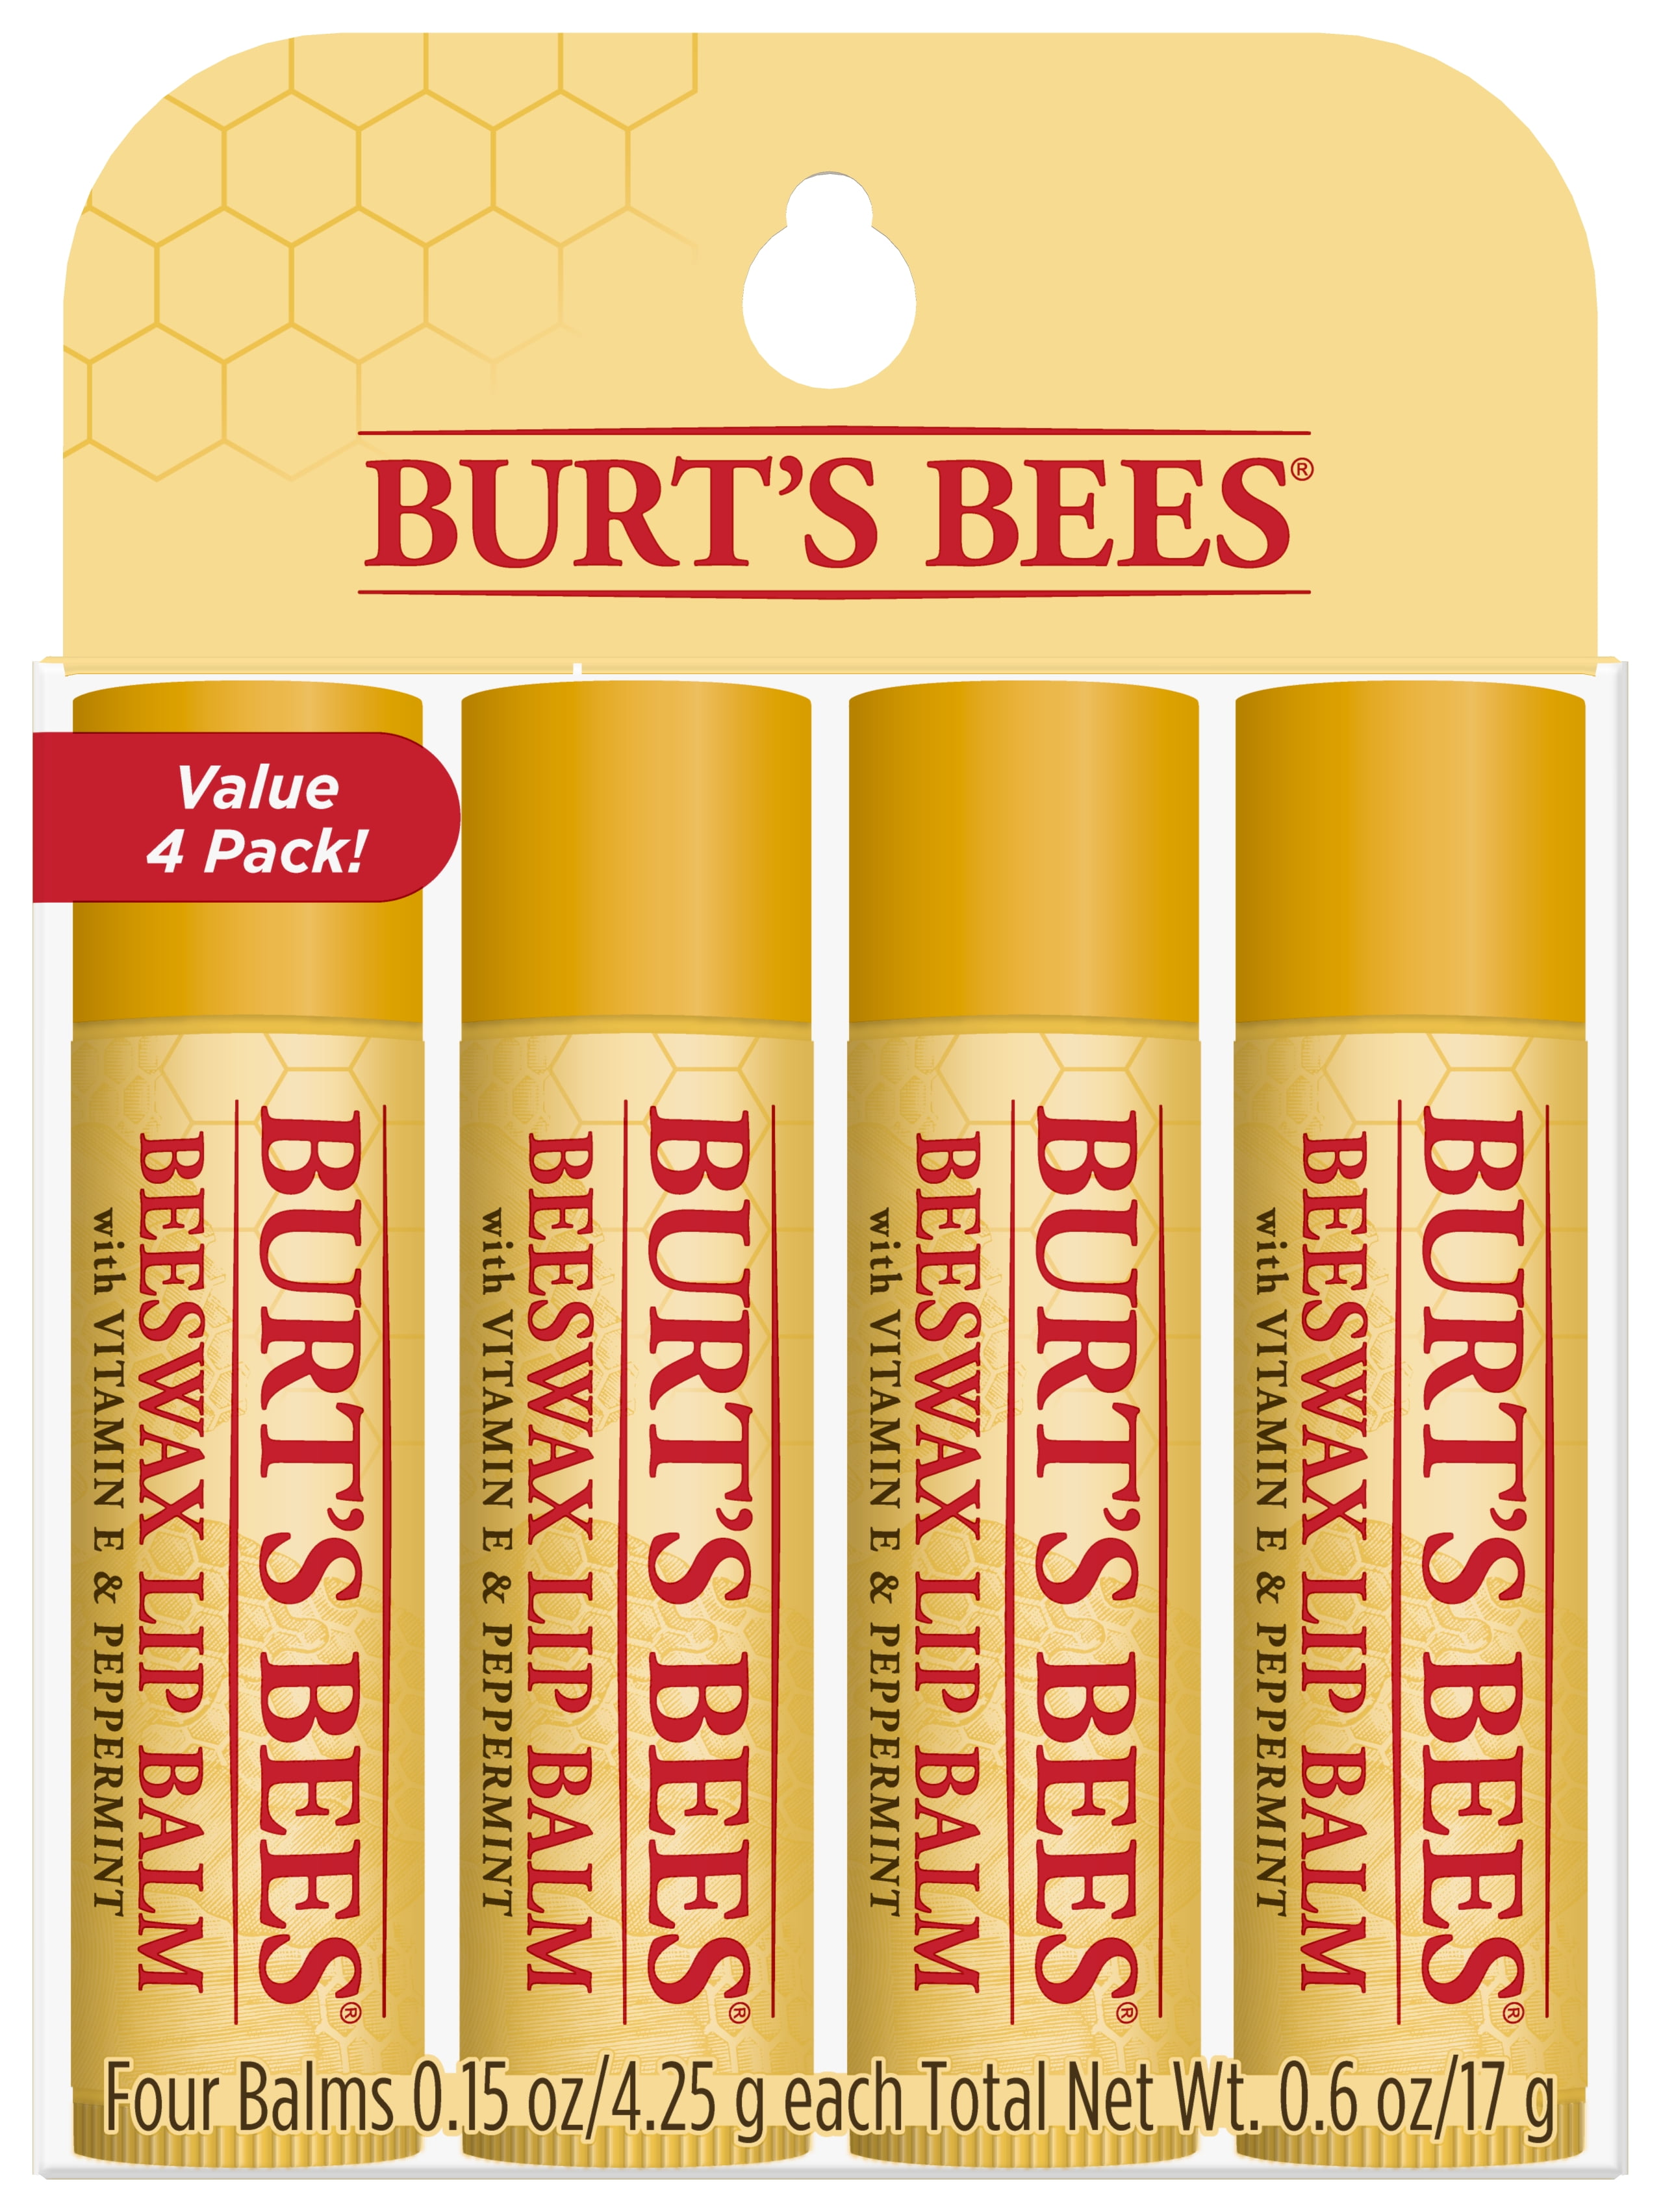 Burt's Bees 100 Natural Moisturizing Lip Balm, Original Beeswax with